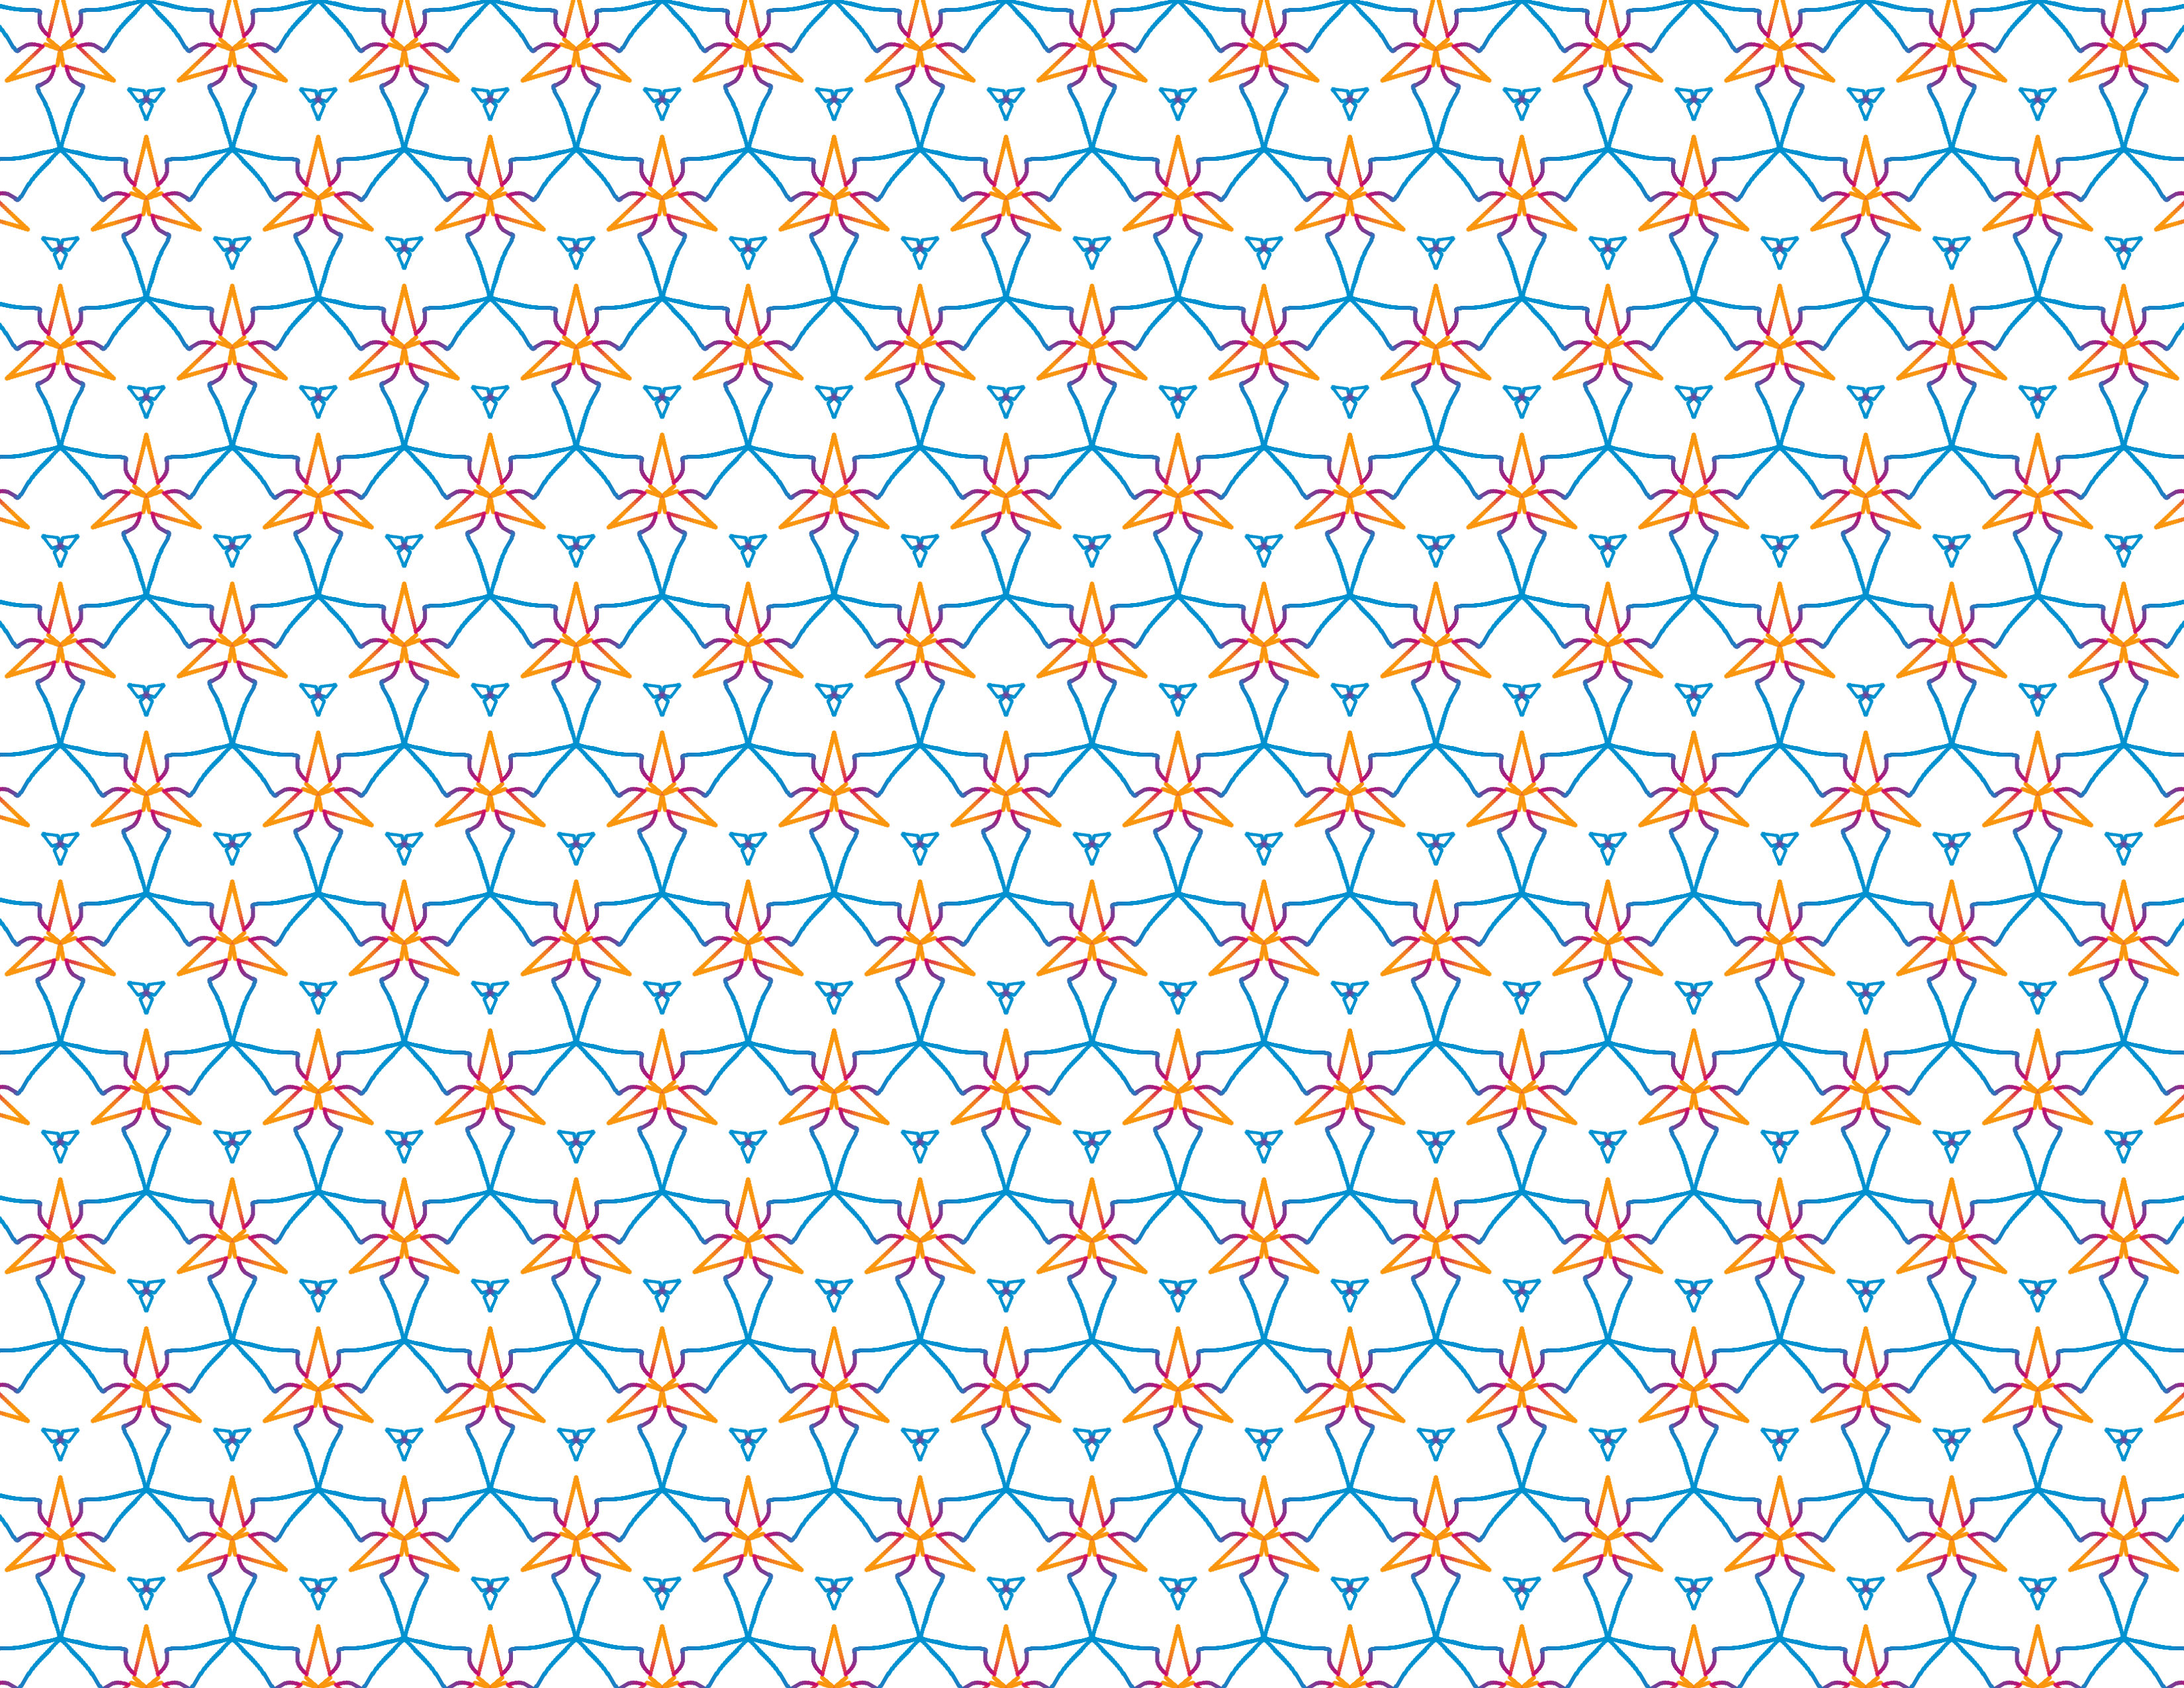 gradiant pattern background free download